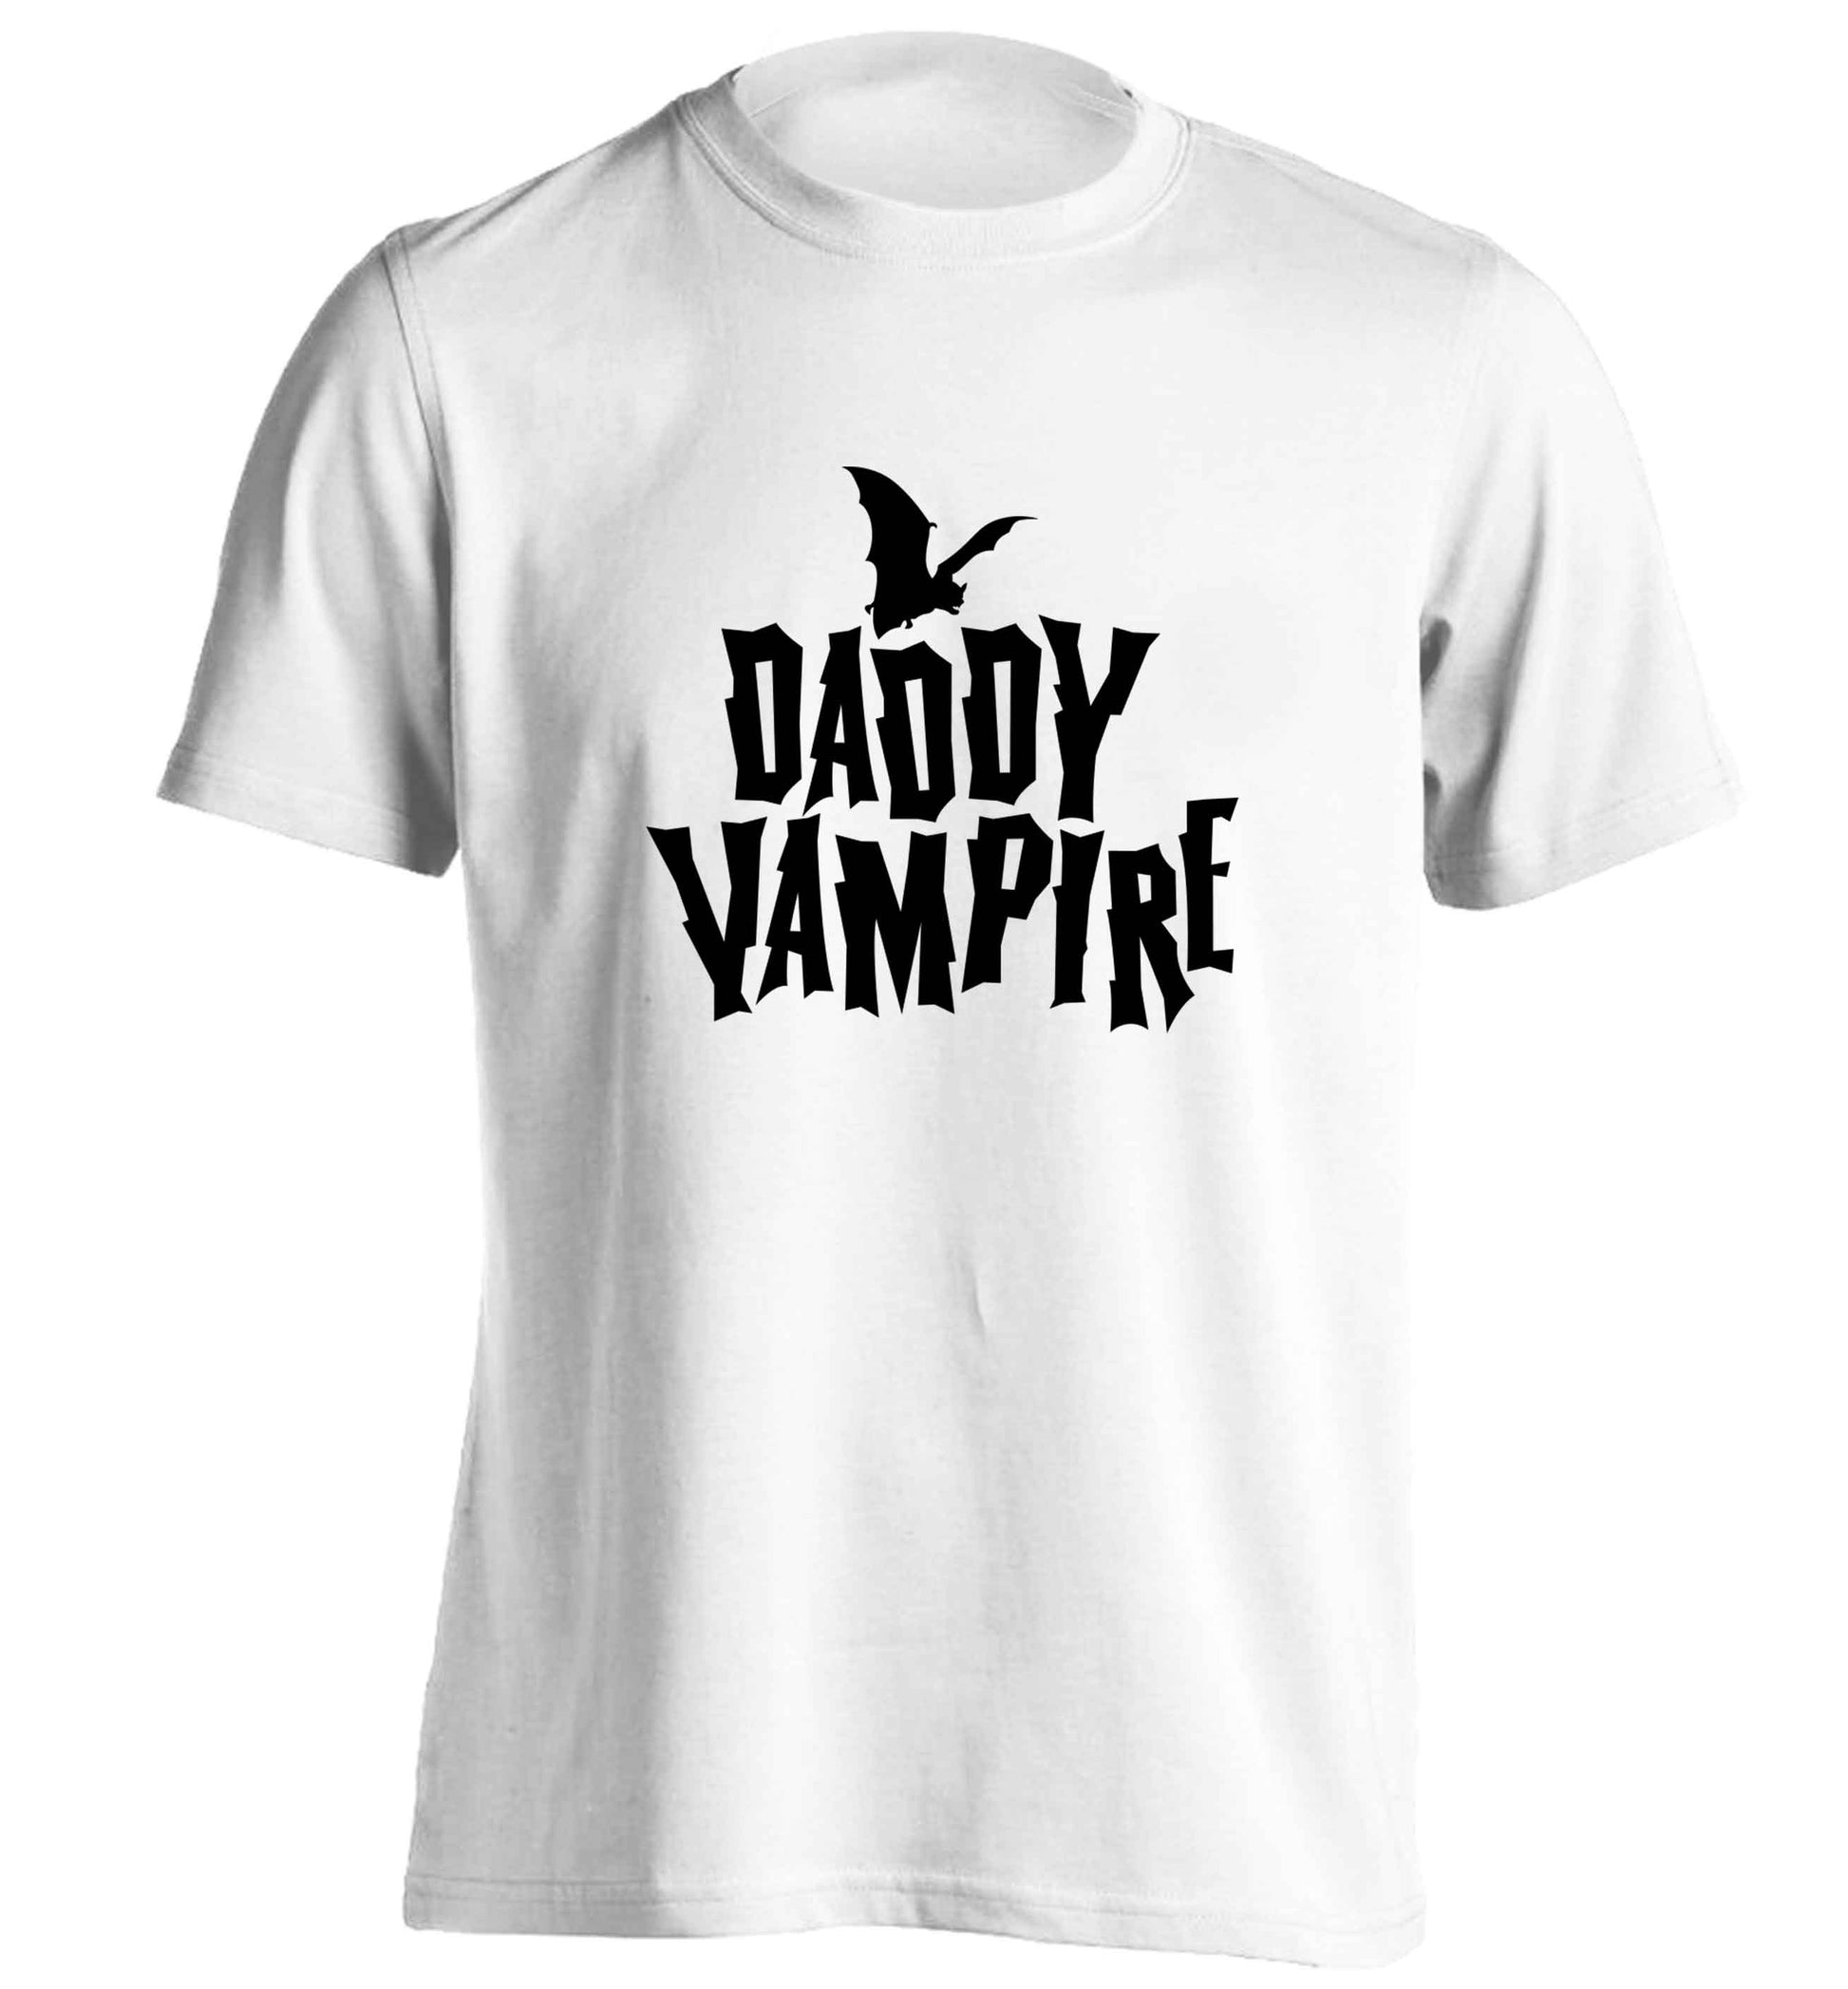 Daddy vampire adults unisex white Tshirt 2XL